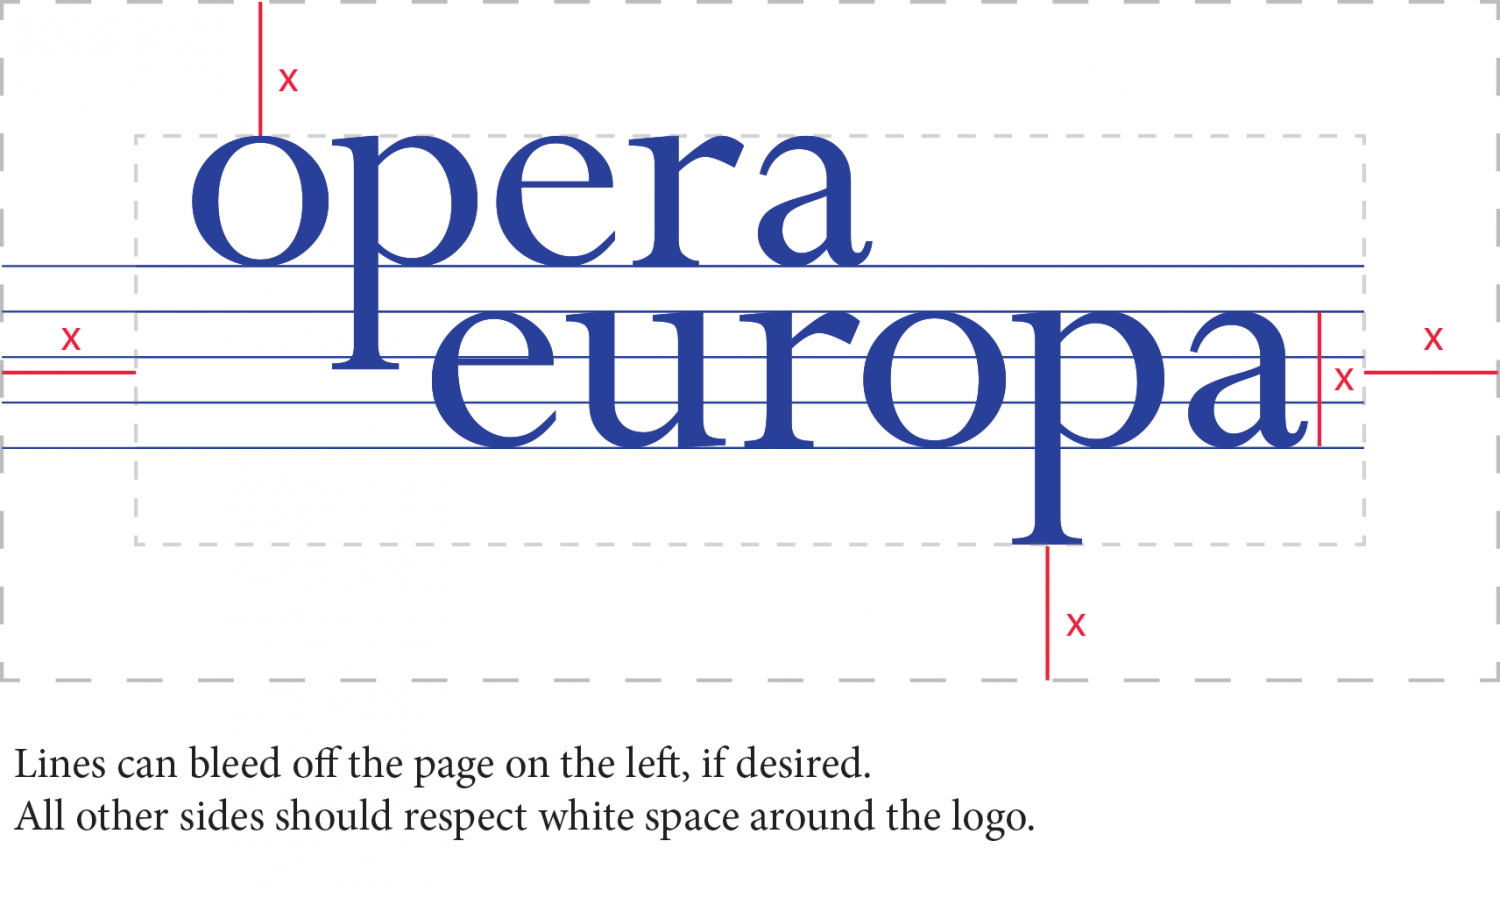 Opera All Logo - Opera Europa logos - Opera-Europa